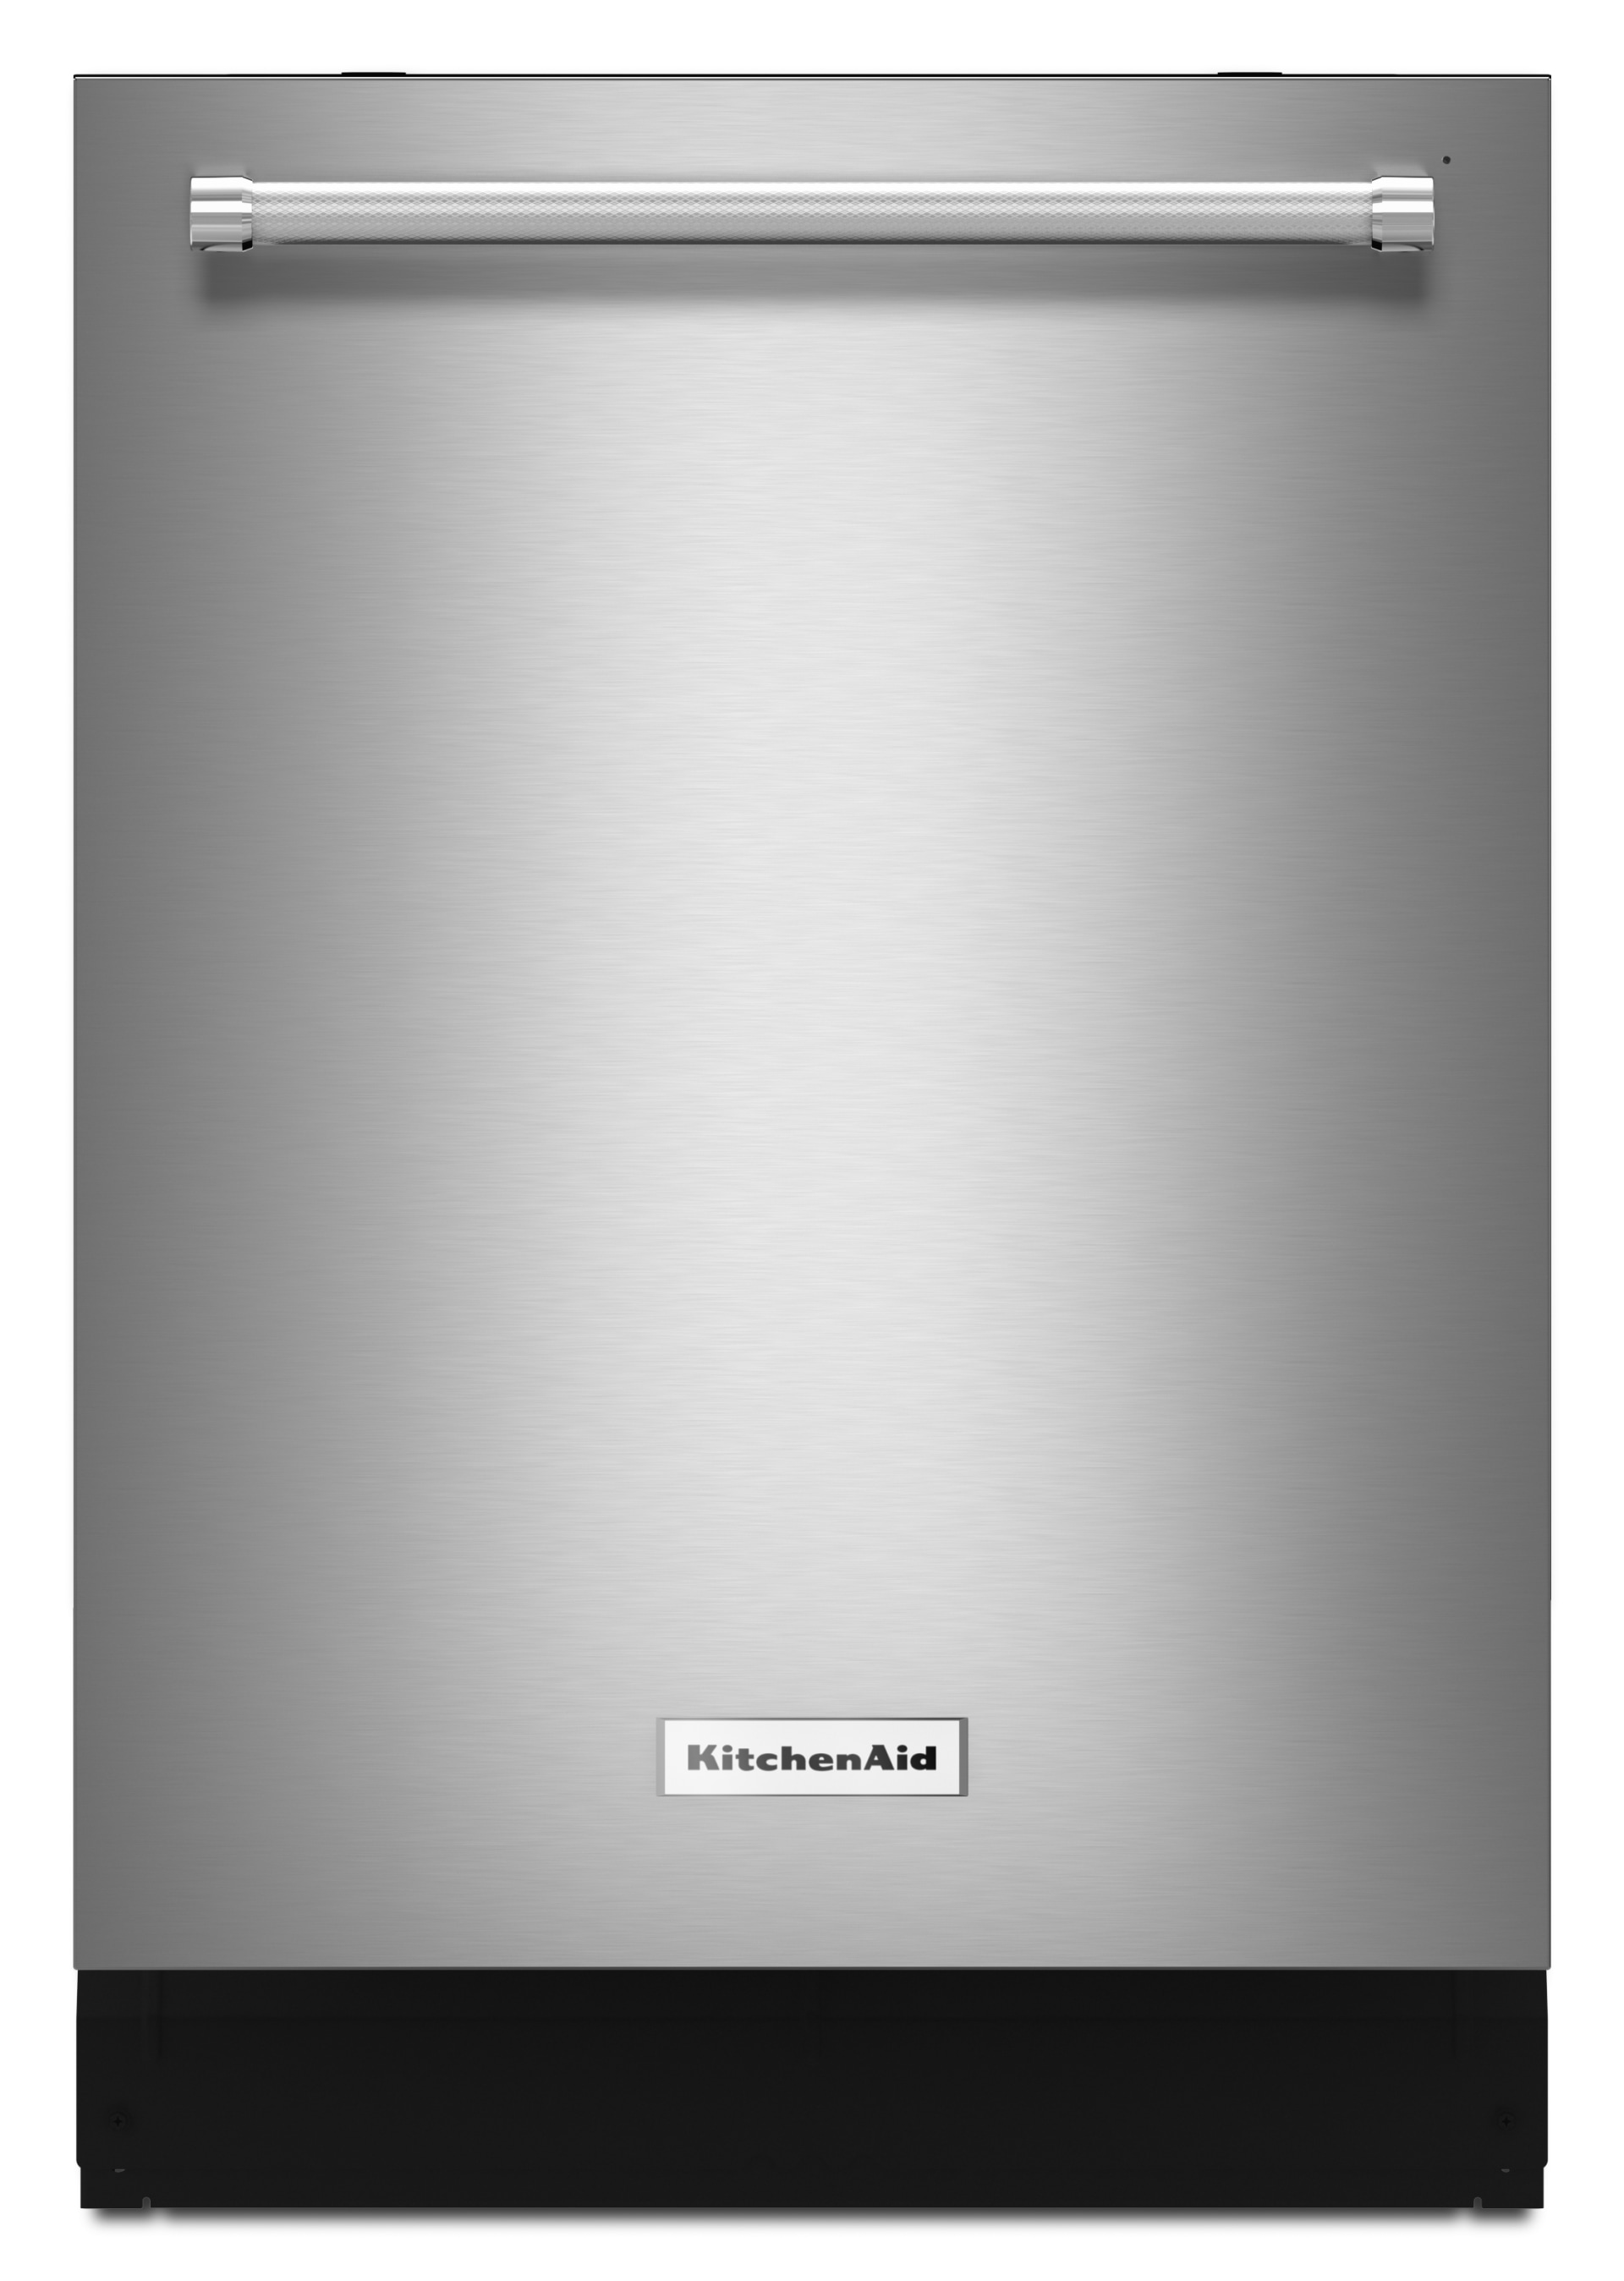 About Kitchenaid Dishwasher